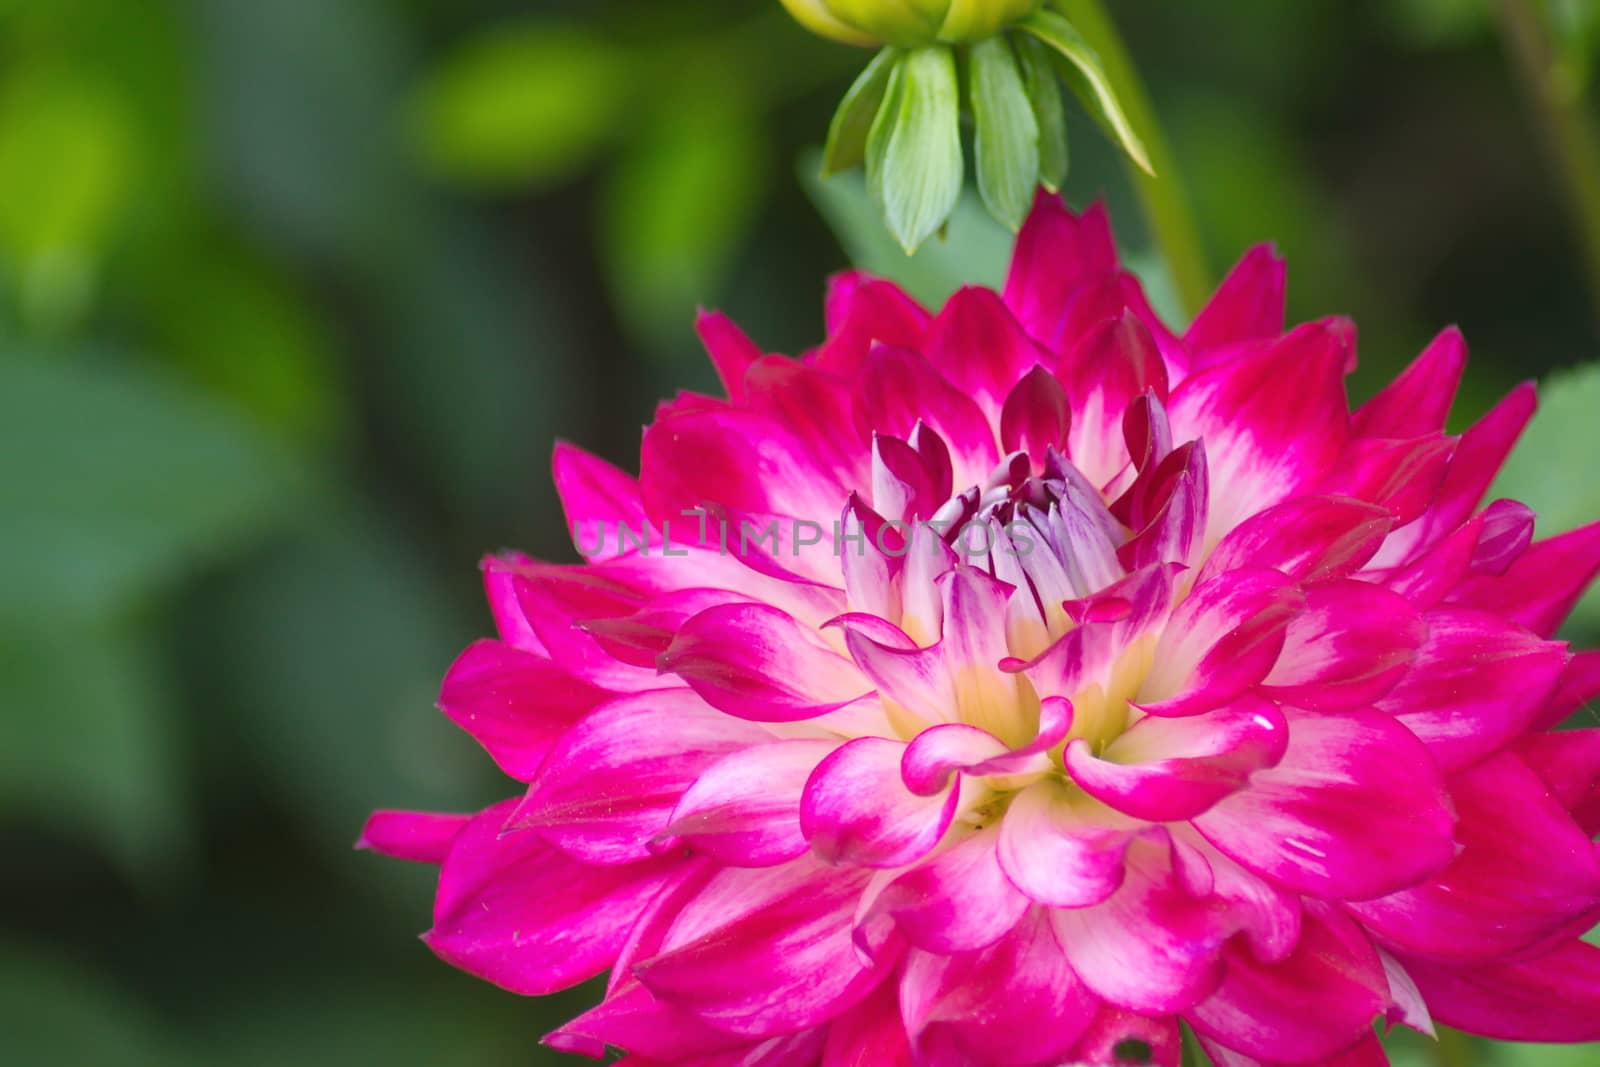 Pink Dahlia flower on blurred background